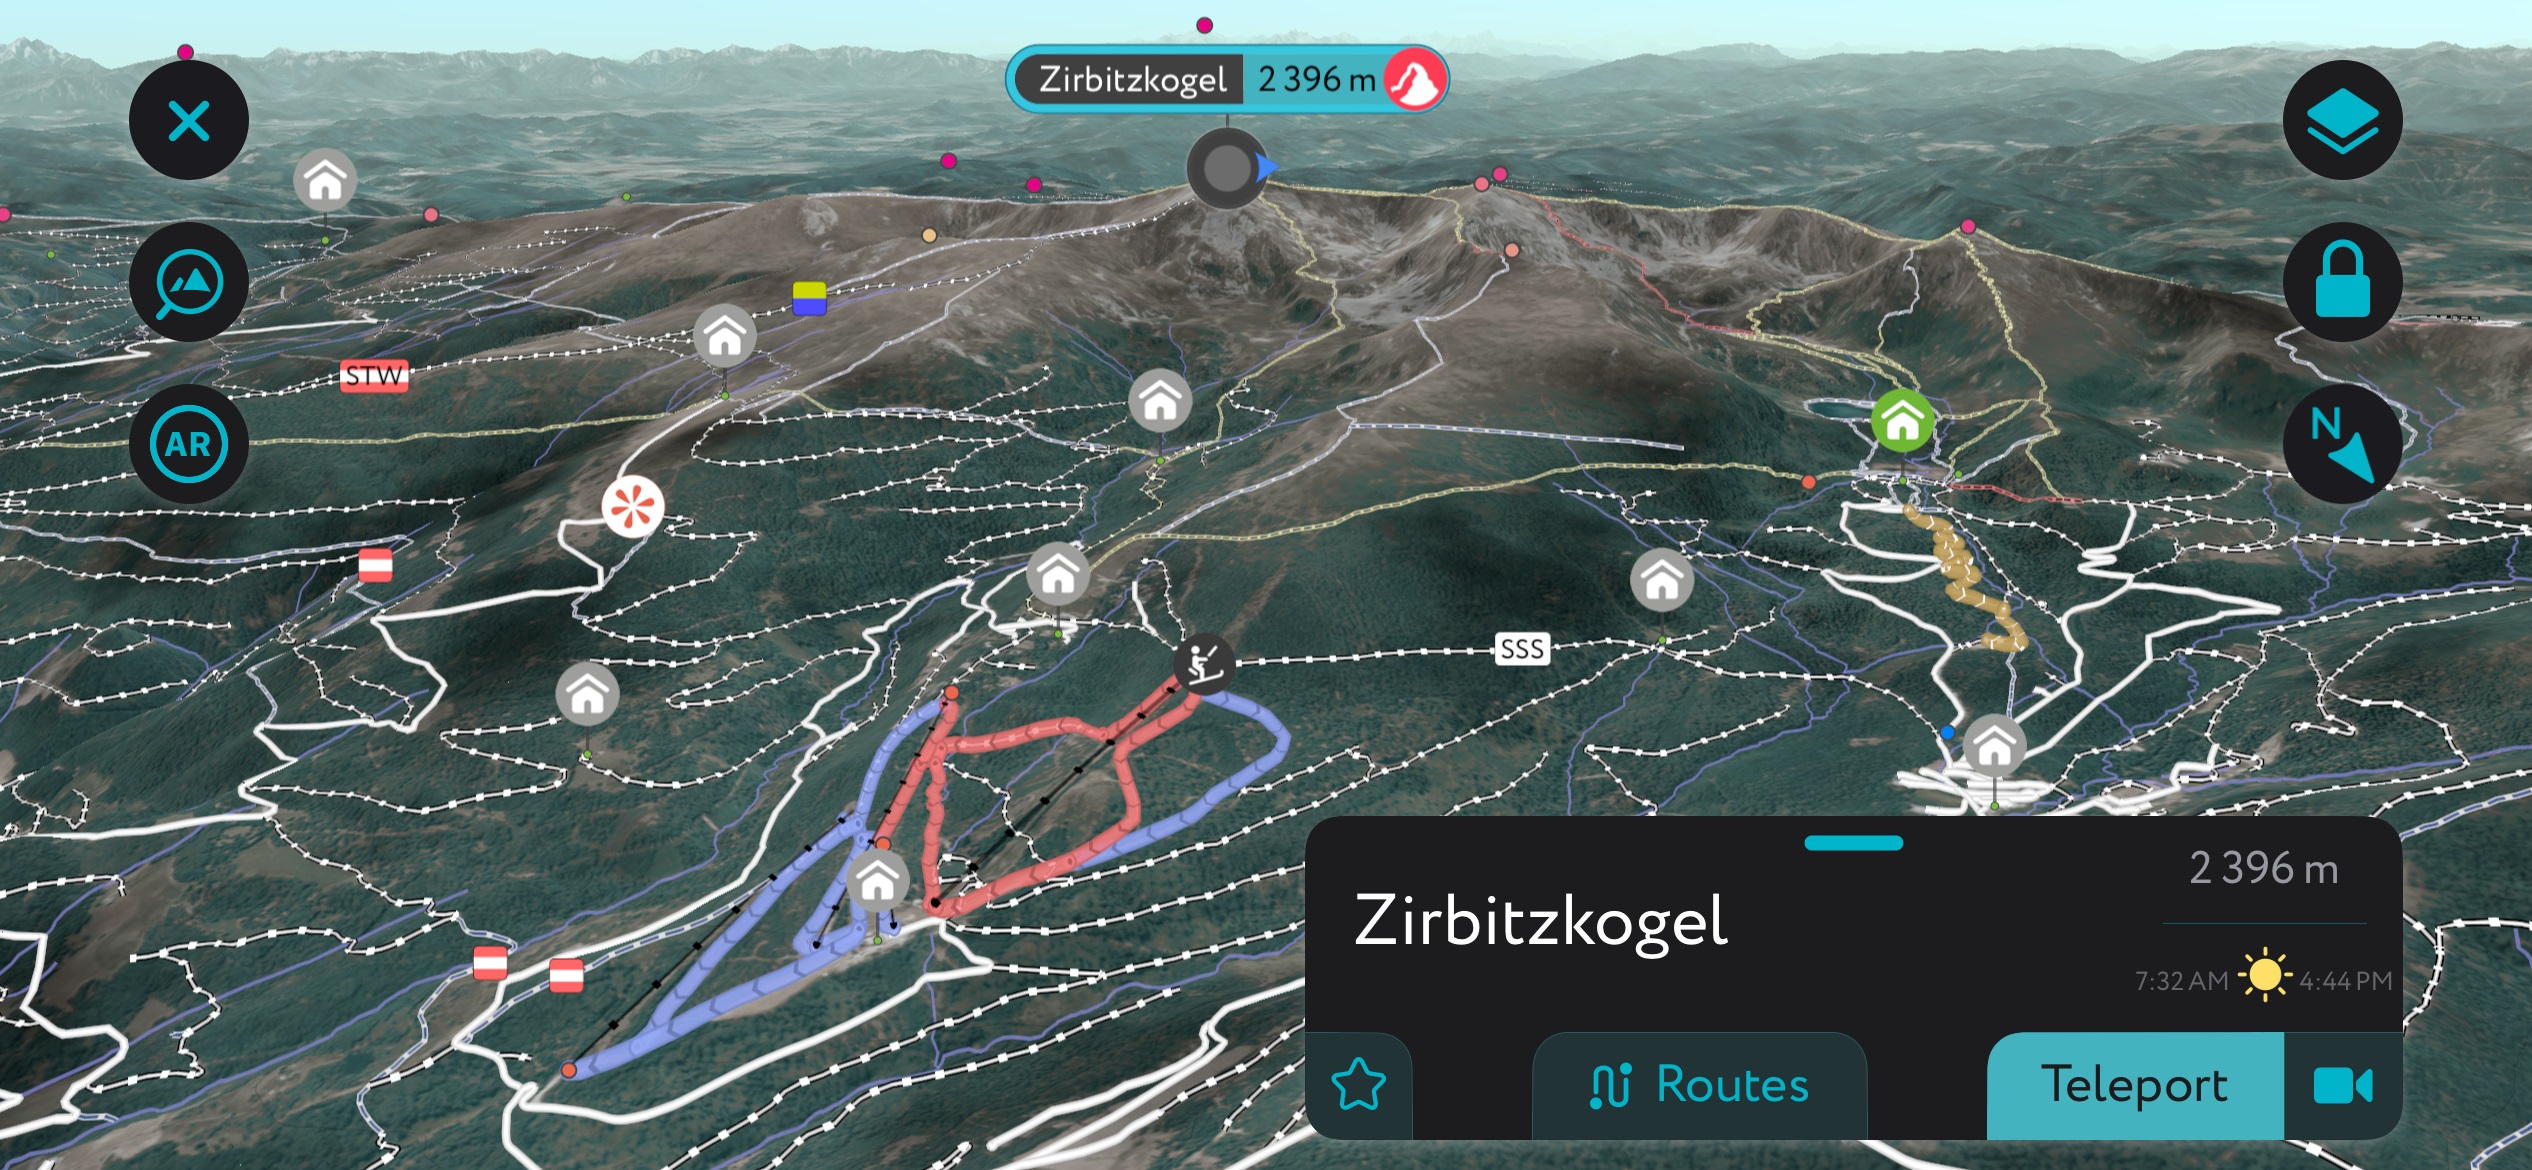 Tonnerhütte-Mühlen using PeakVisor’s mobile app. Zirbitzkogel